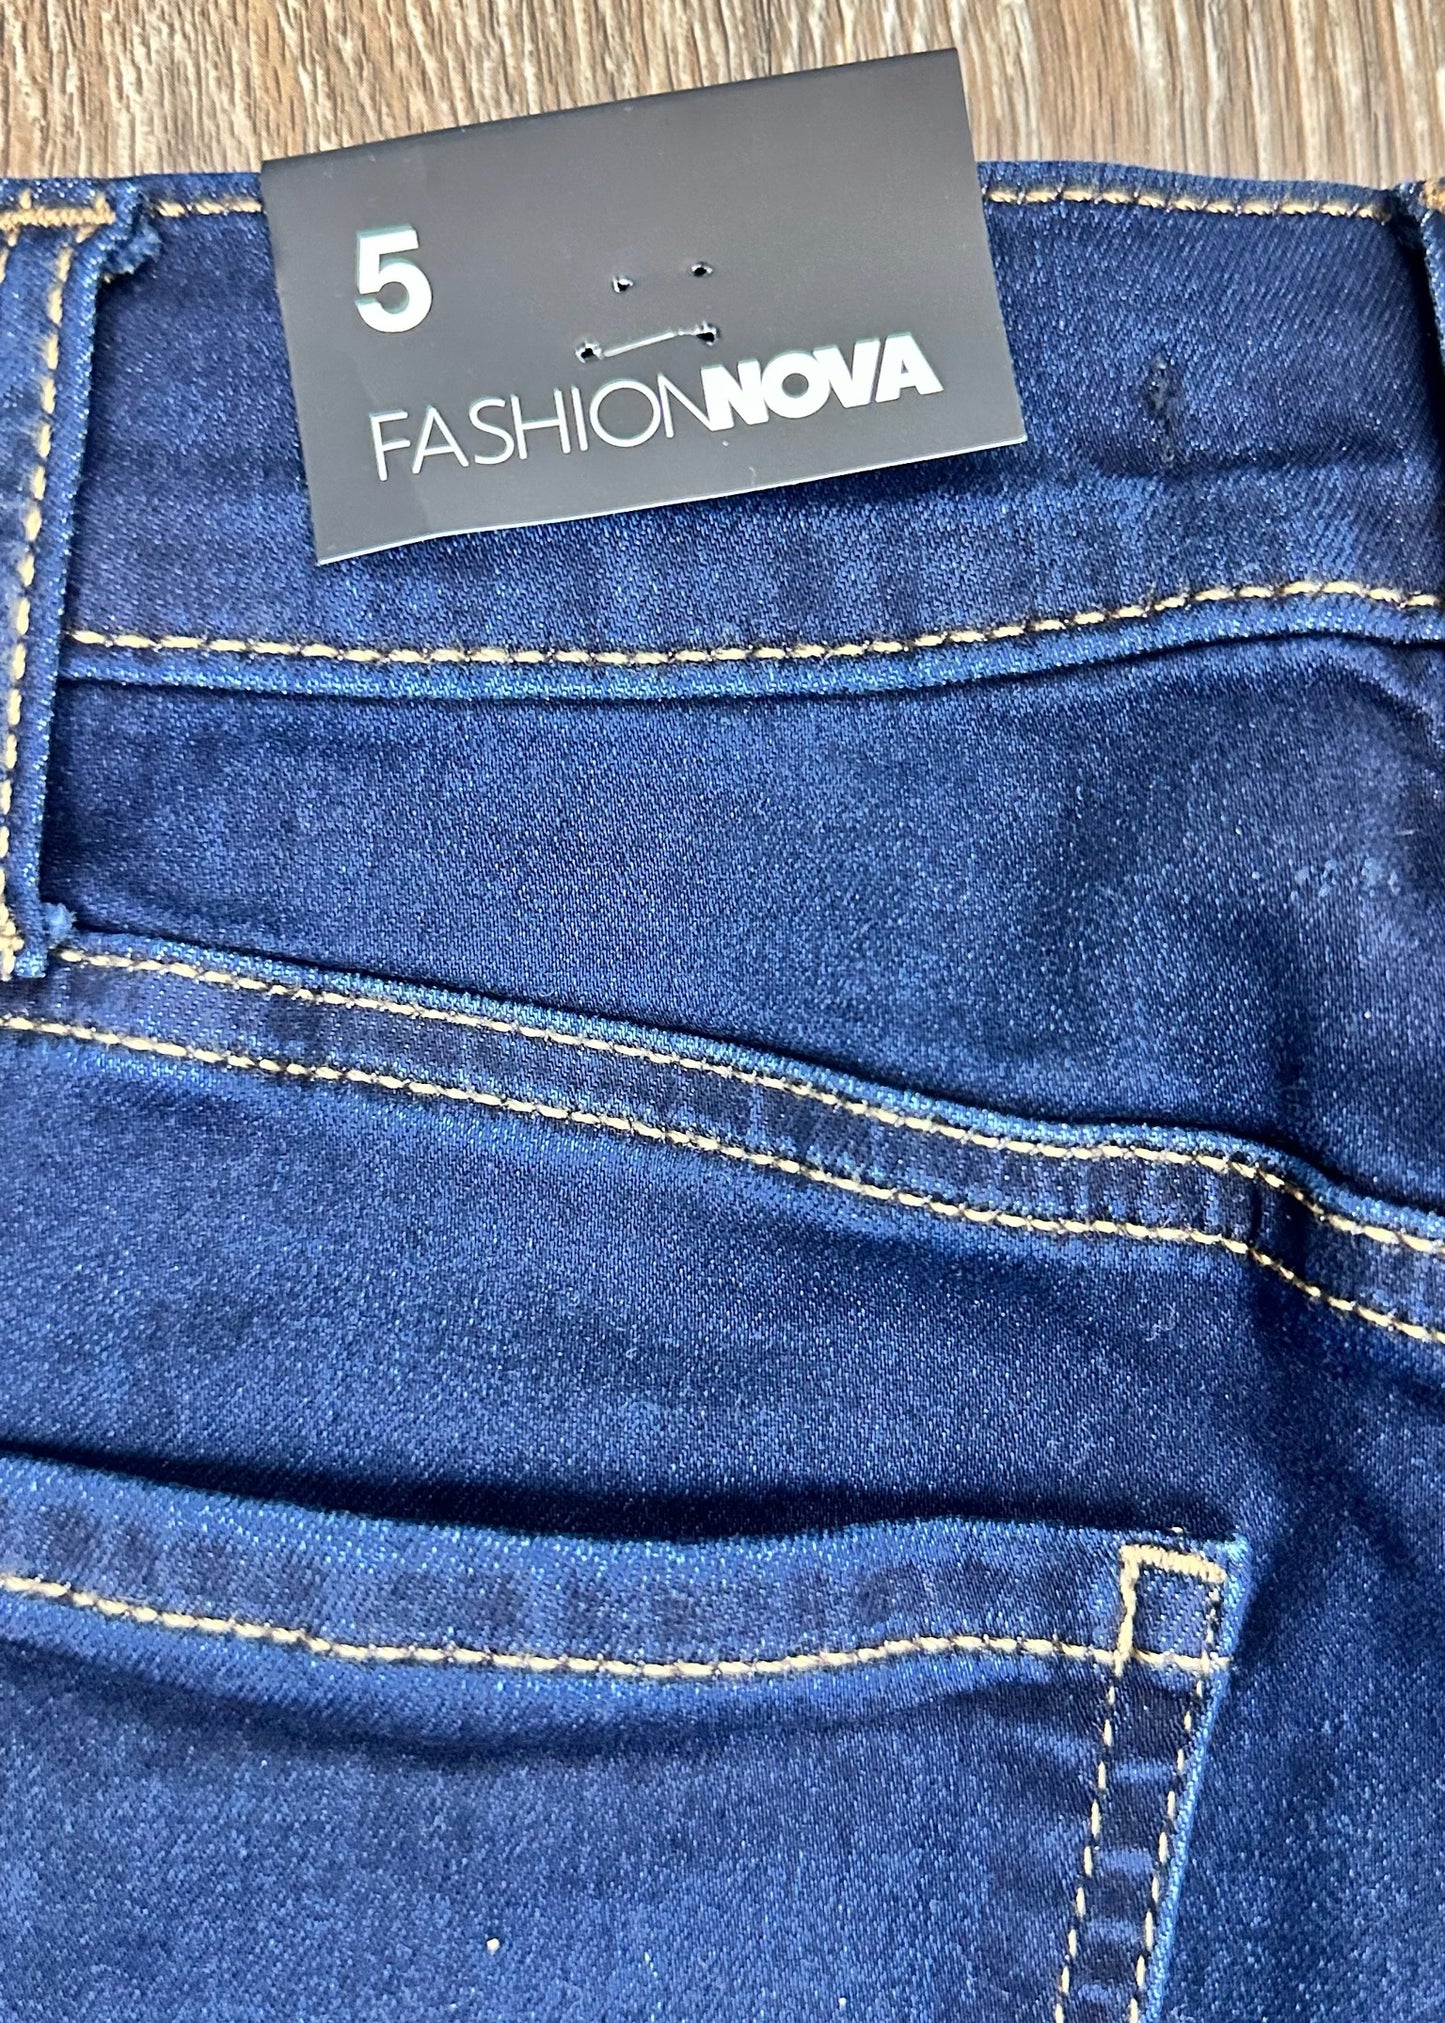 Dark Denim Jeans by Fashion Nova